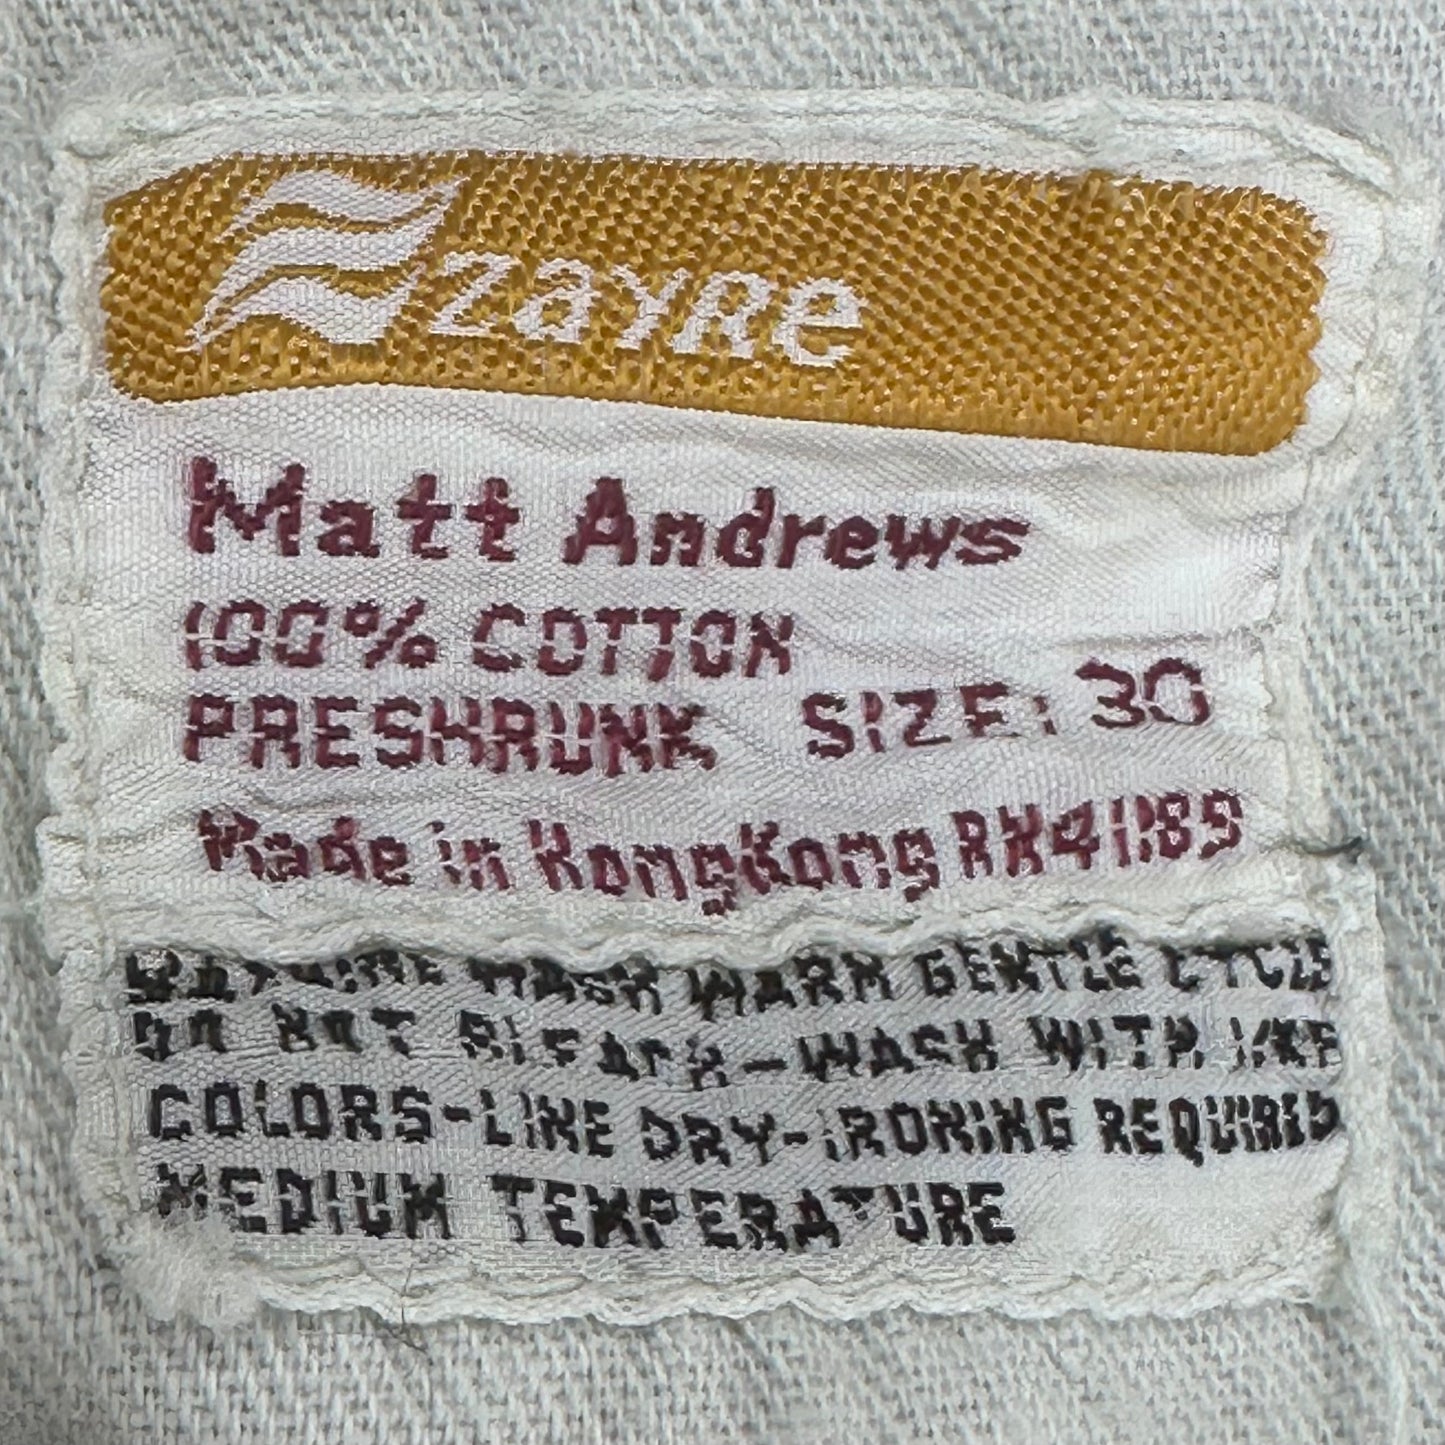 1970s Cut Off Blue Jean Shorts, Zayre Matt Andrew’s, 29.5" Waist